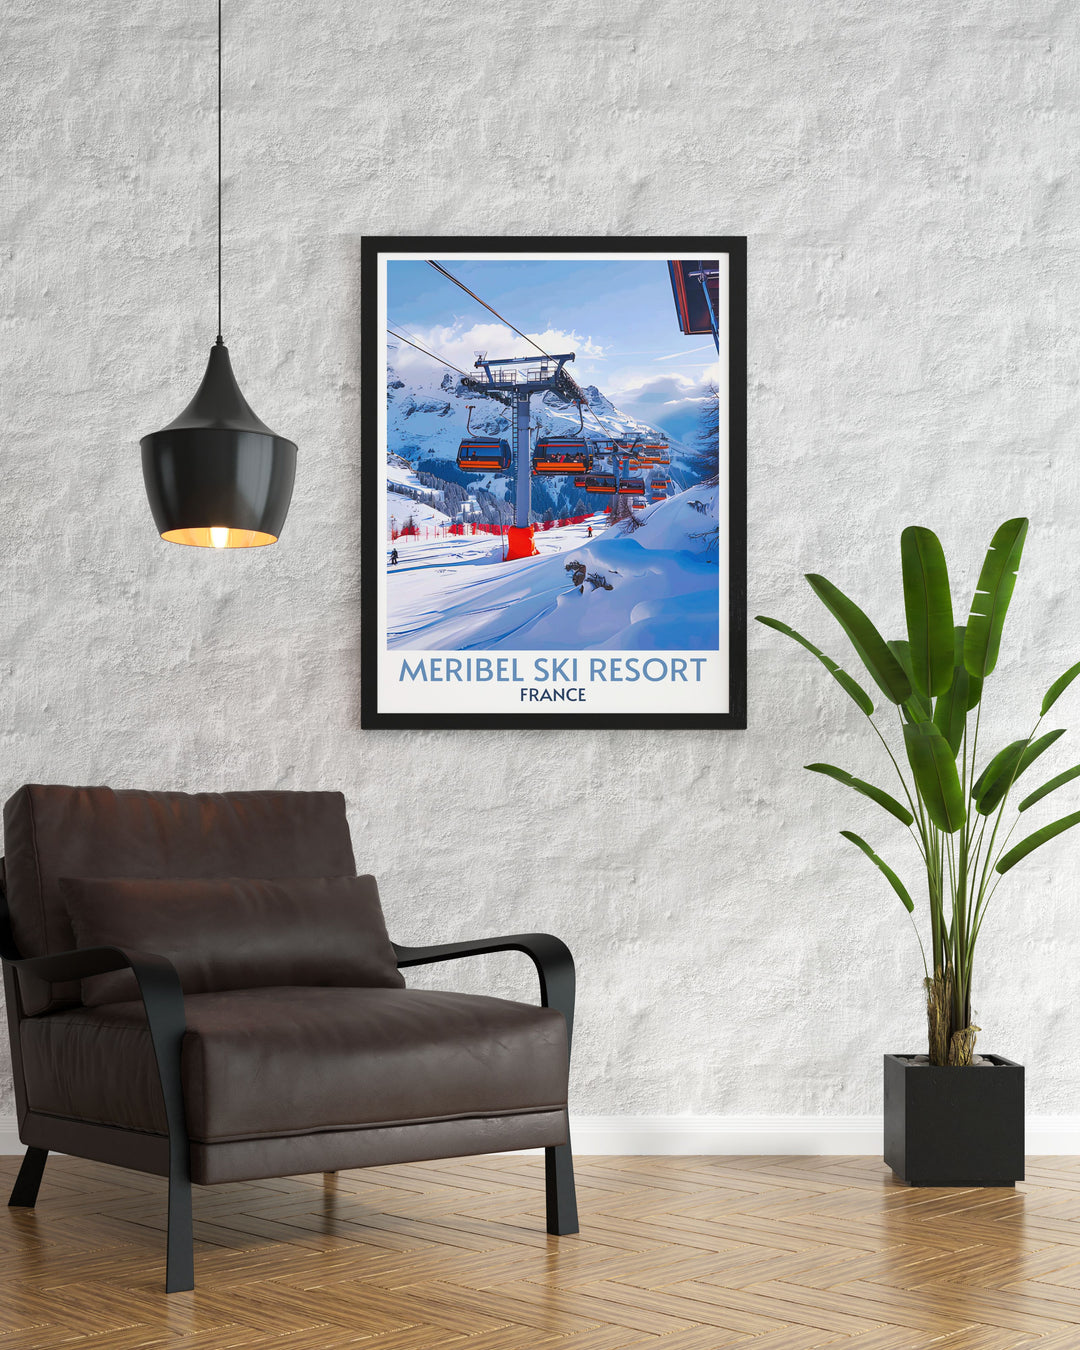 Illustration of Meribels ski lifts operating during a serene snowfall, capturing the quiet moments that make ski trips memorable.